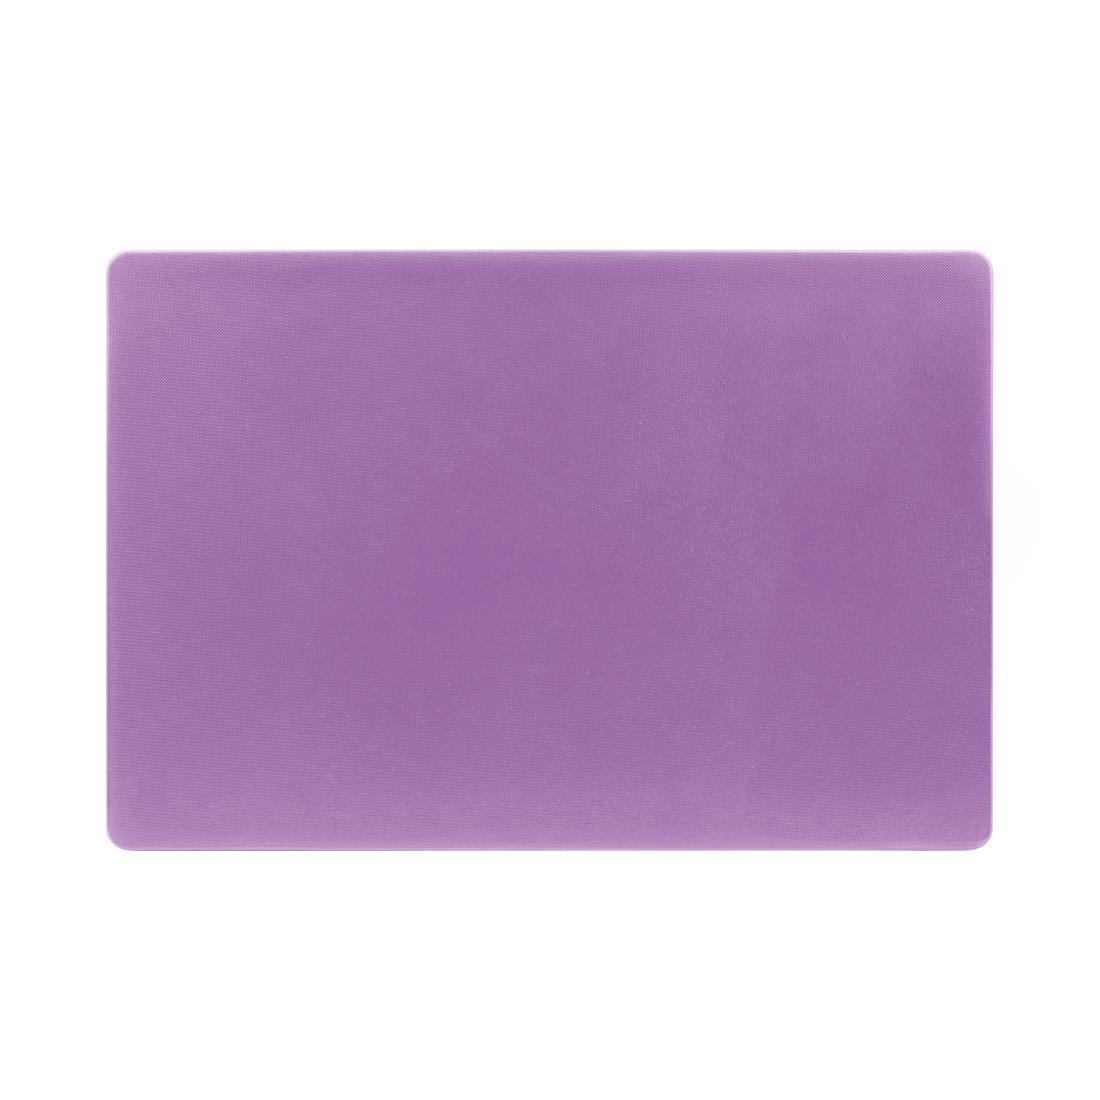 Hygiplas Low Density Chopping Board Purple - 300x450x20mm